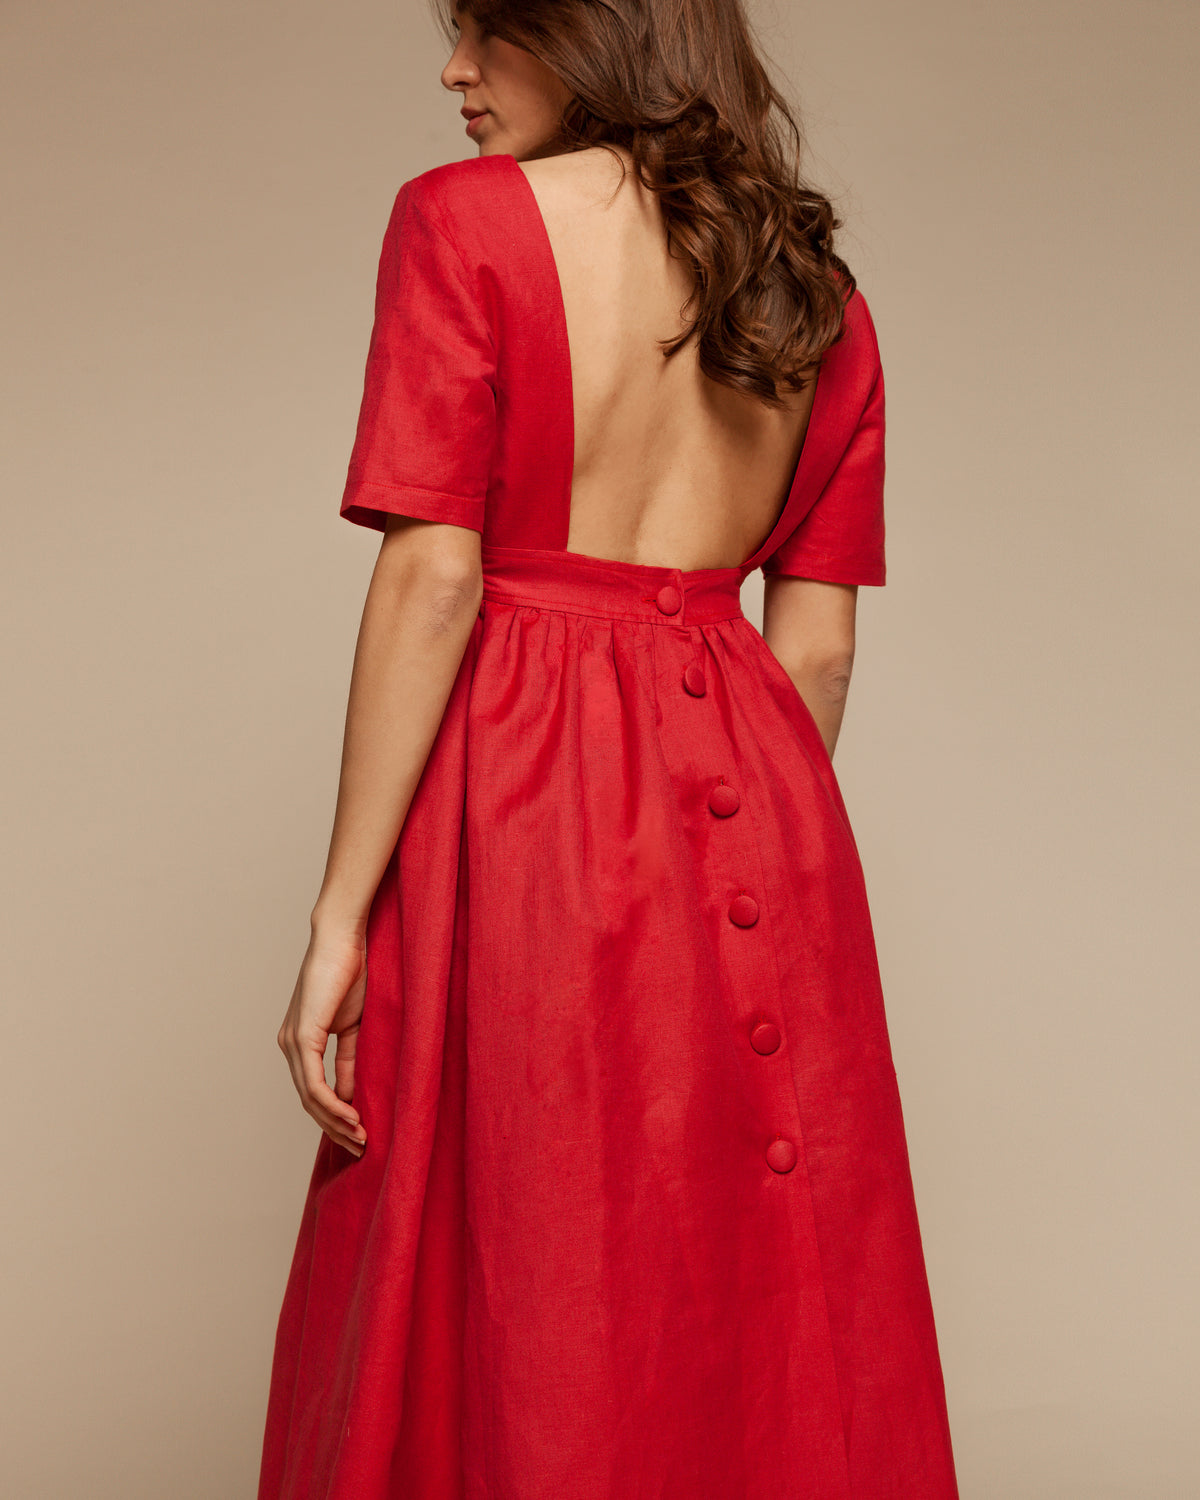 Backless deep-red dress